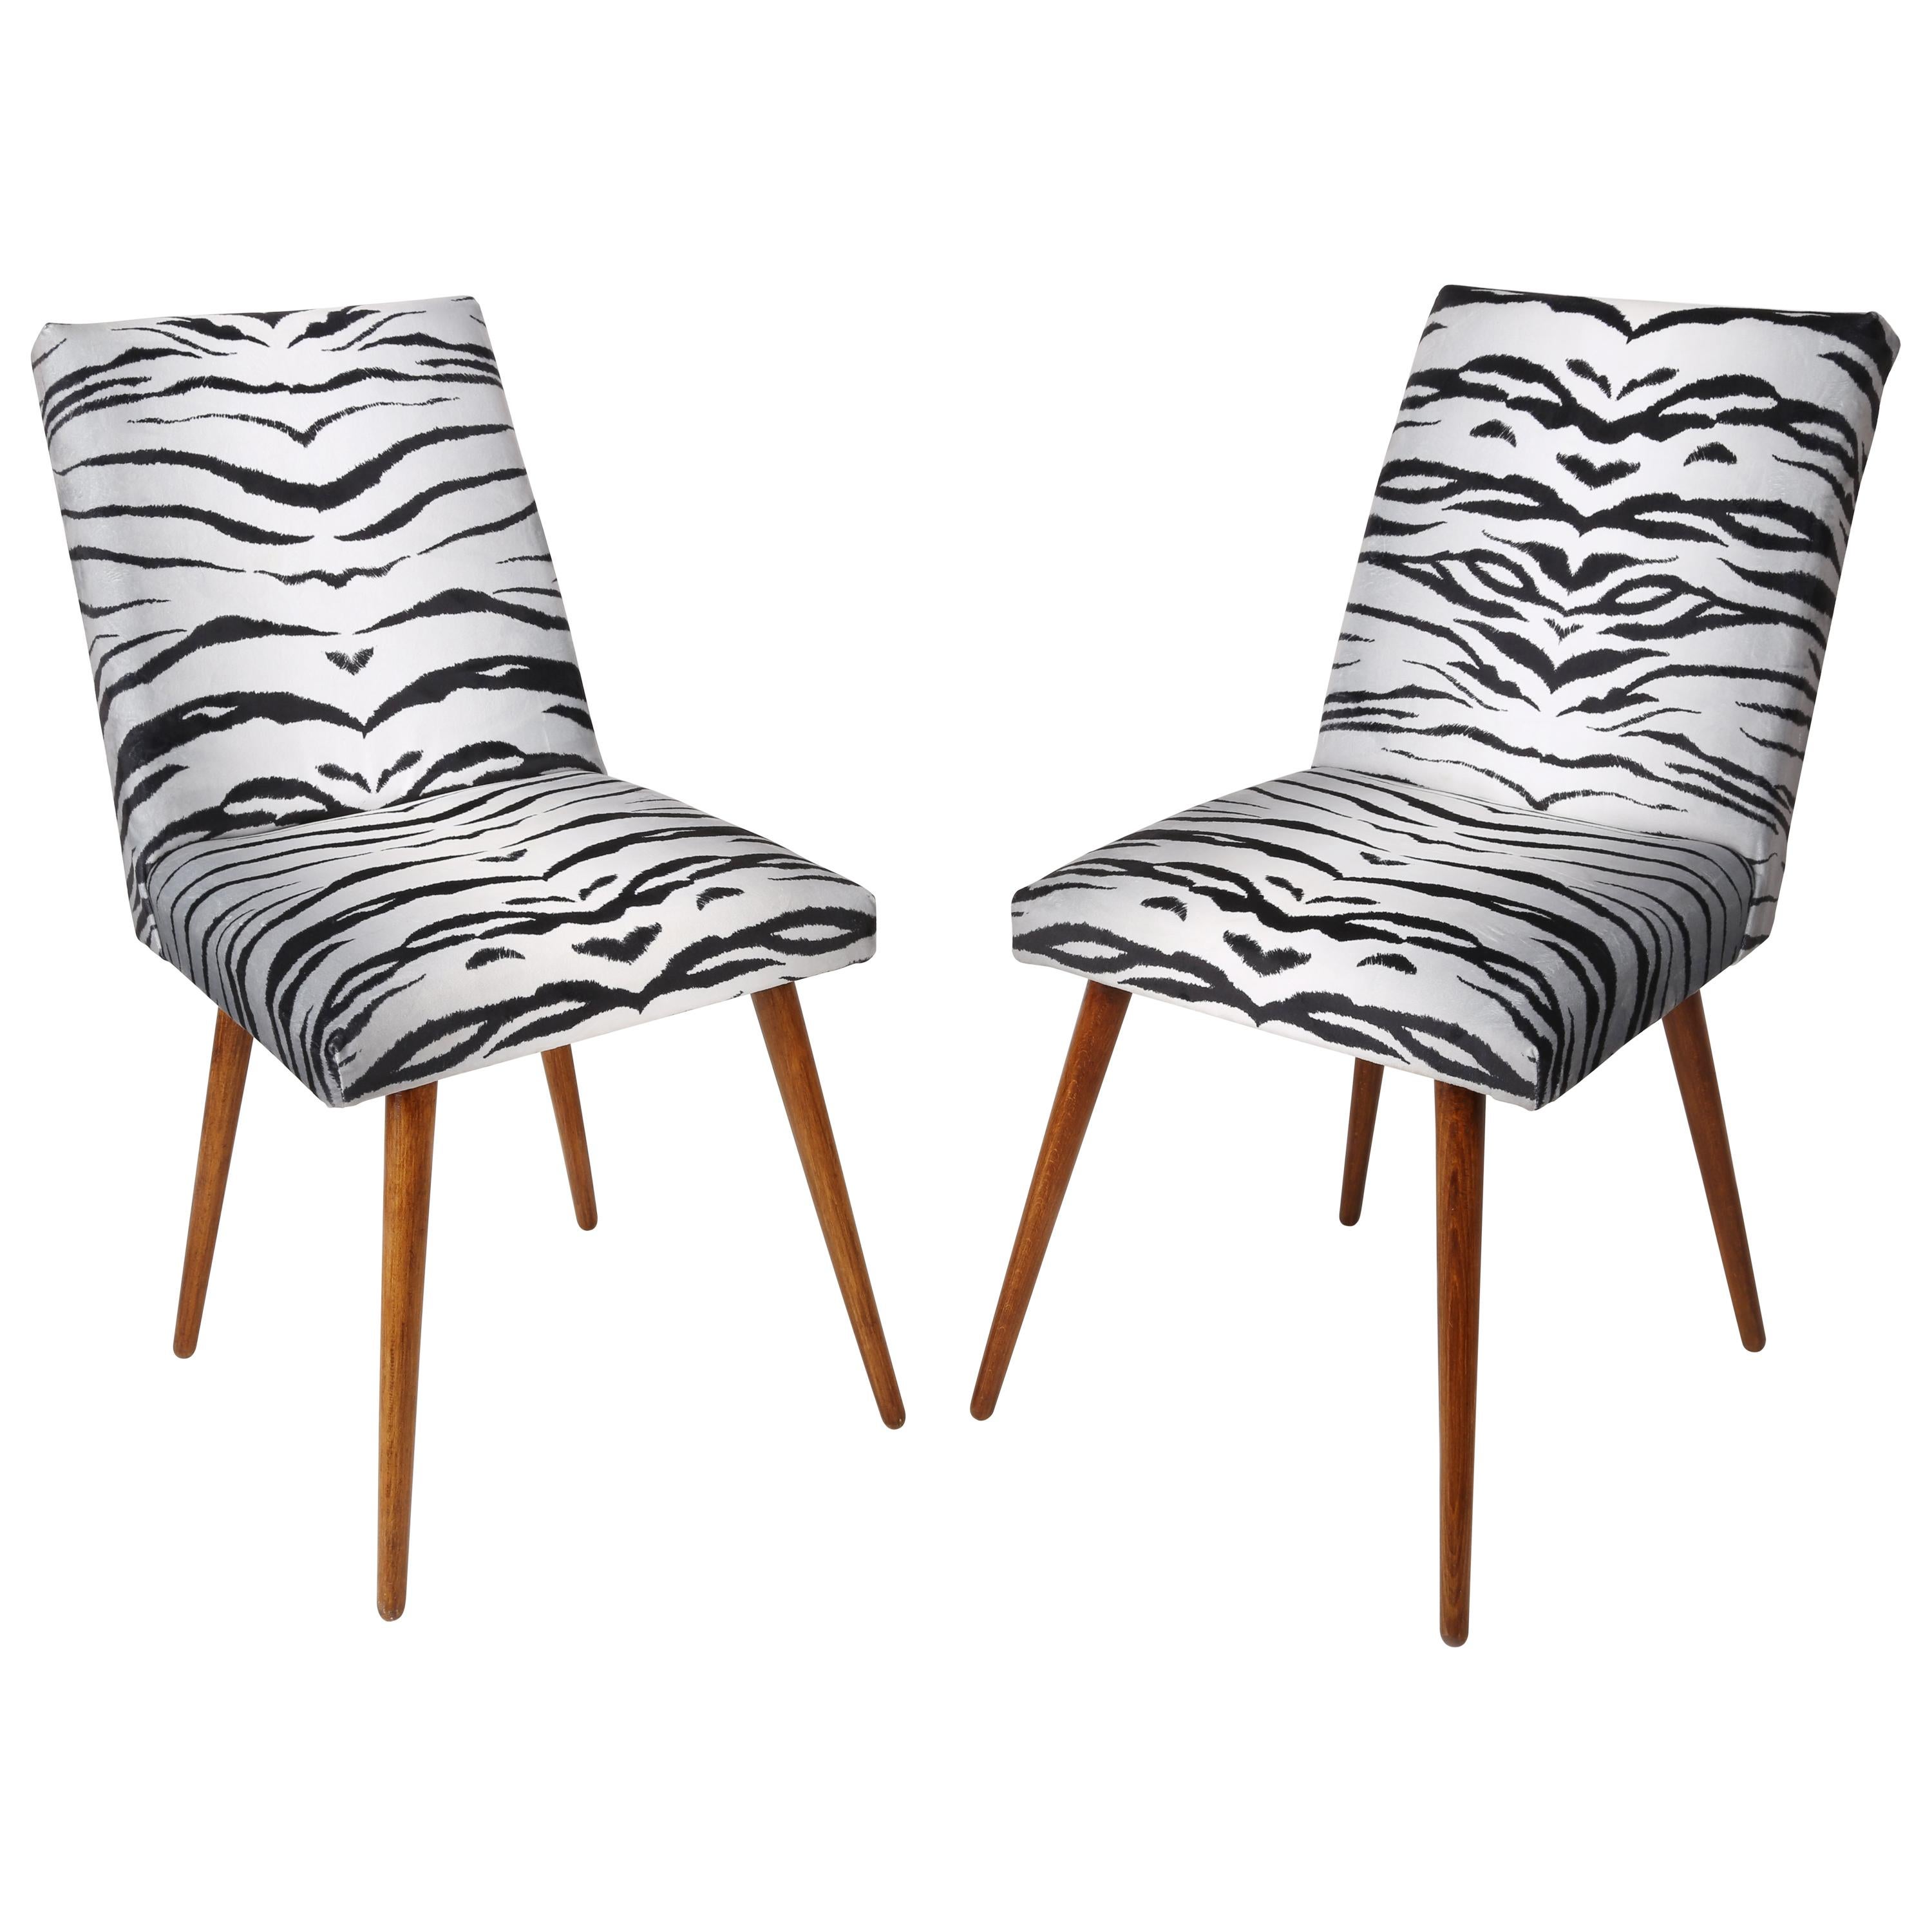 Set of Two 20th Century Black and White Zebra Velvet Chairs, 1960s